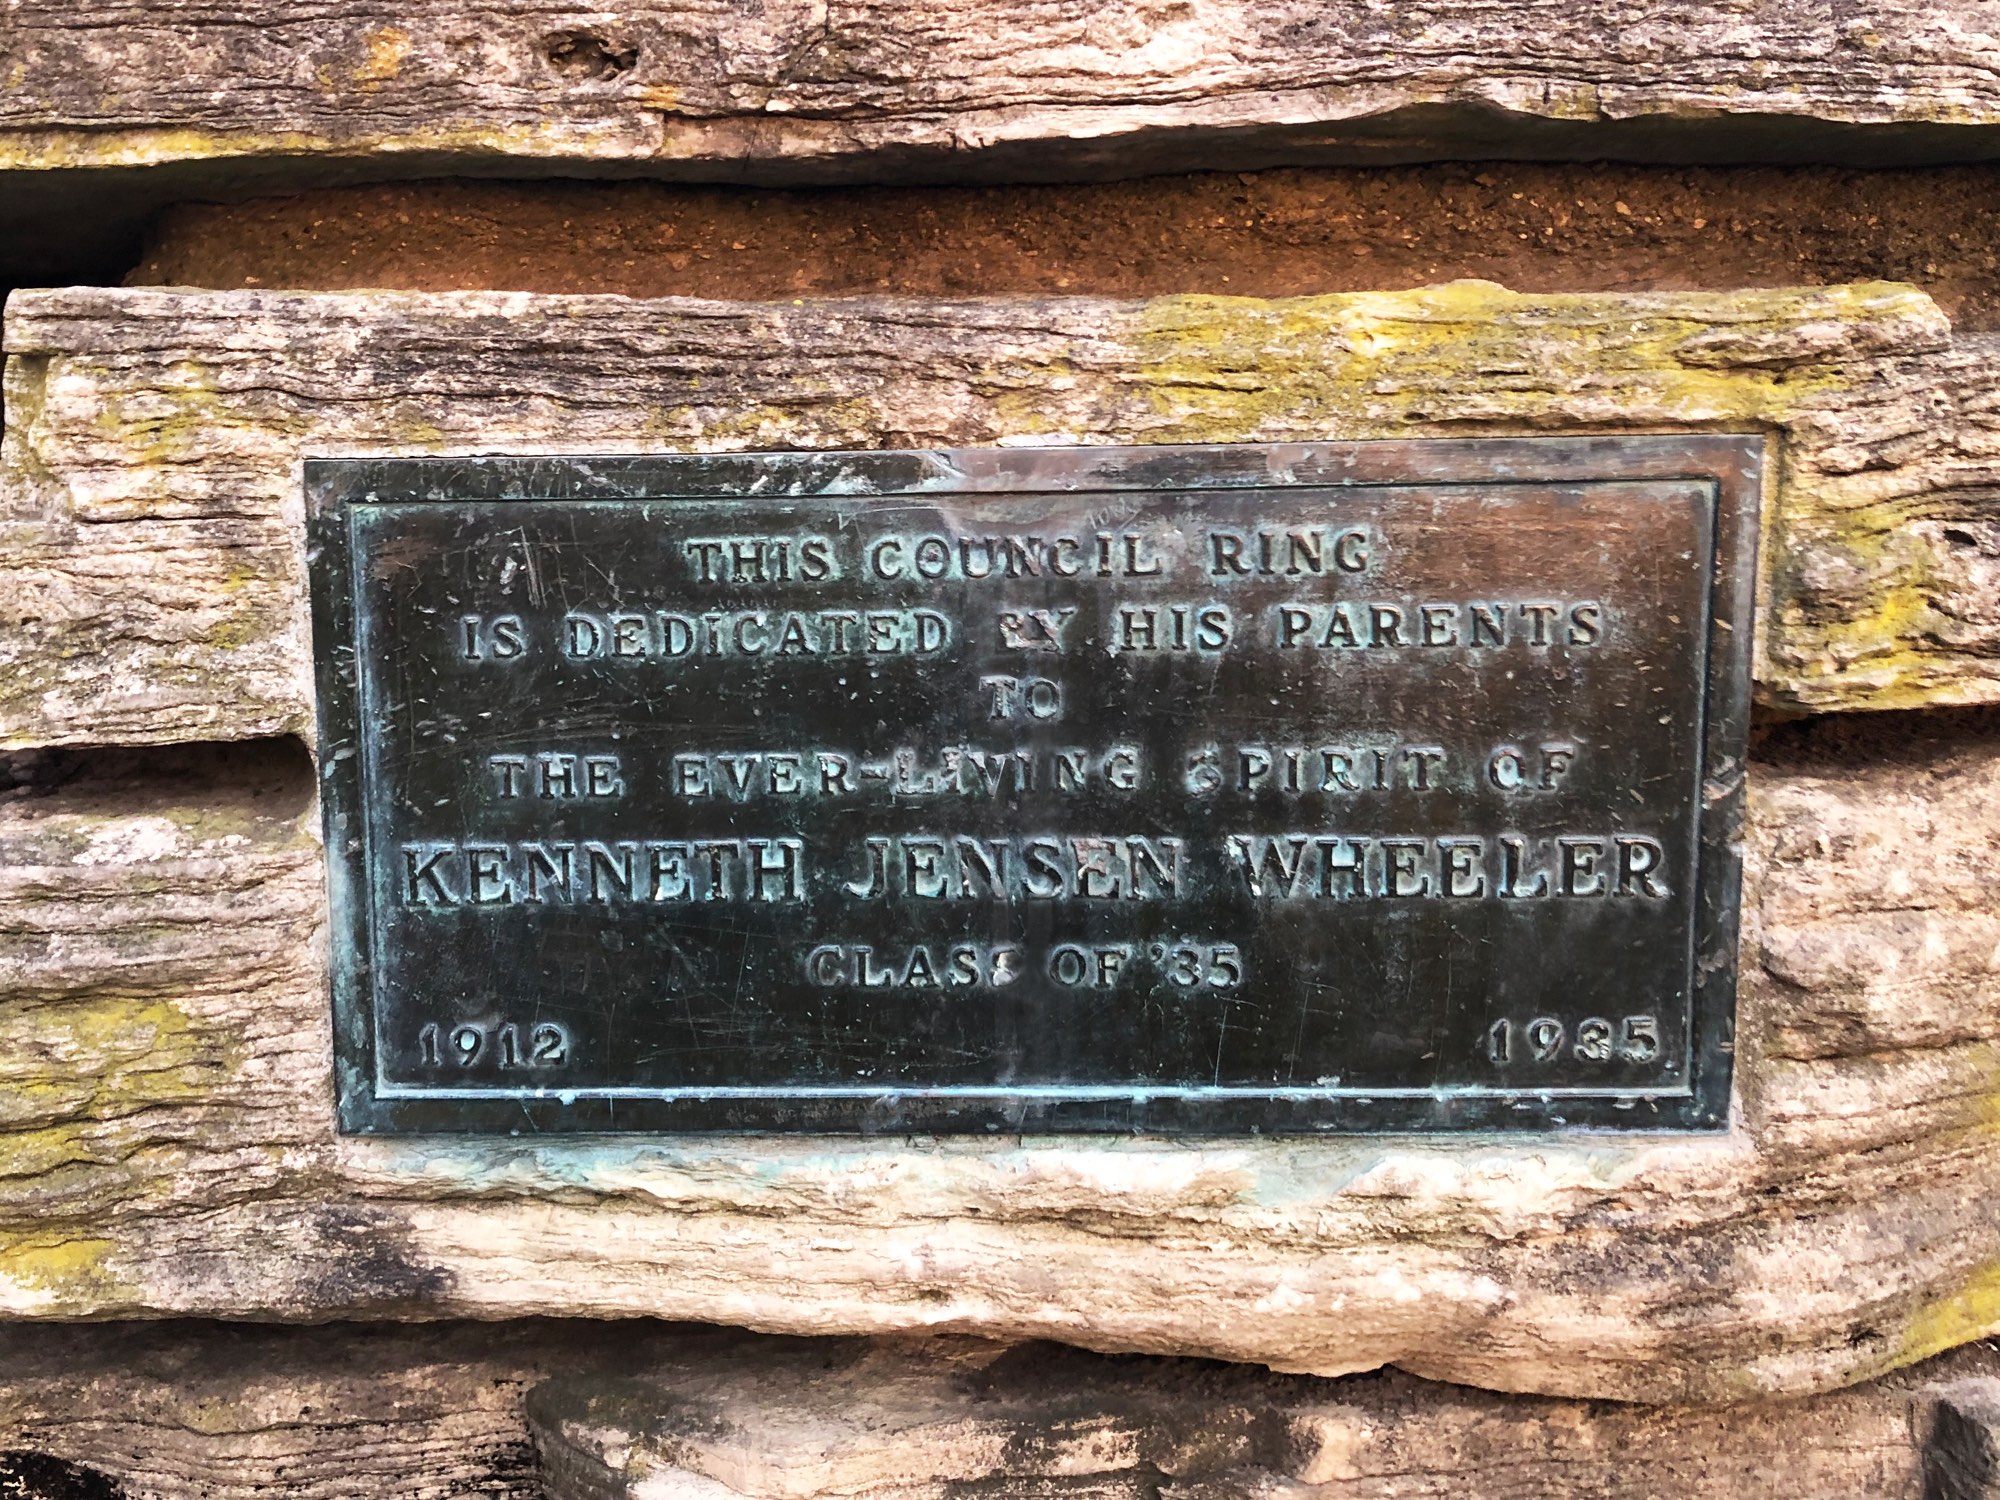 Council Ring dedication plaque.